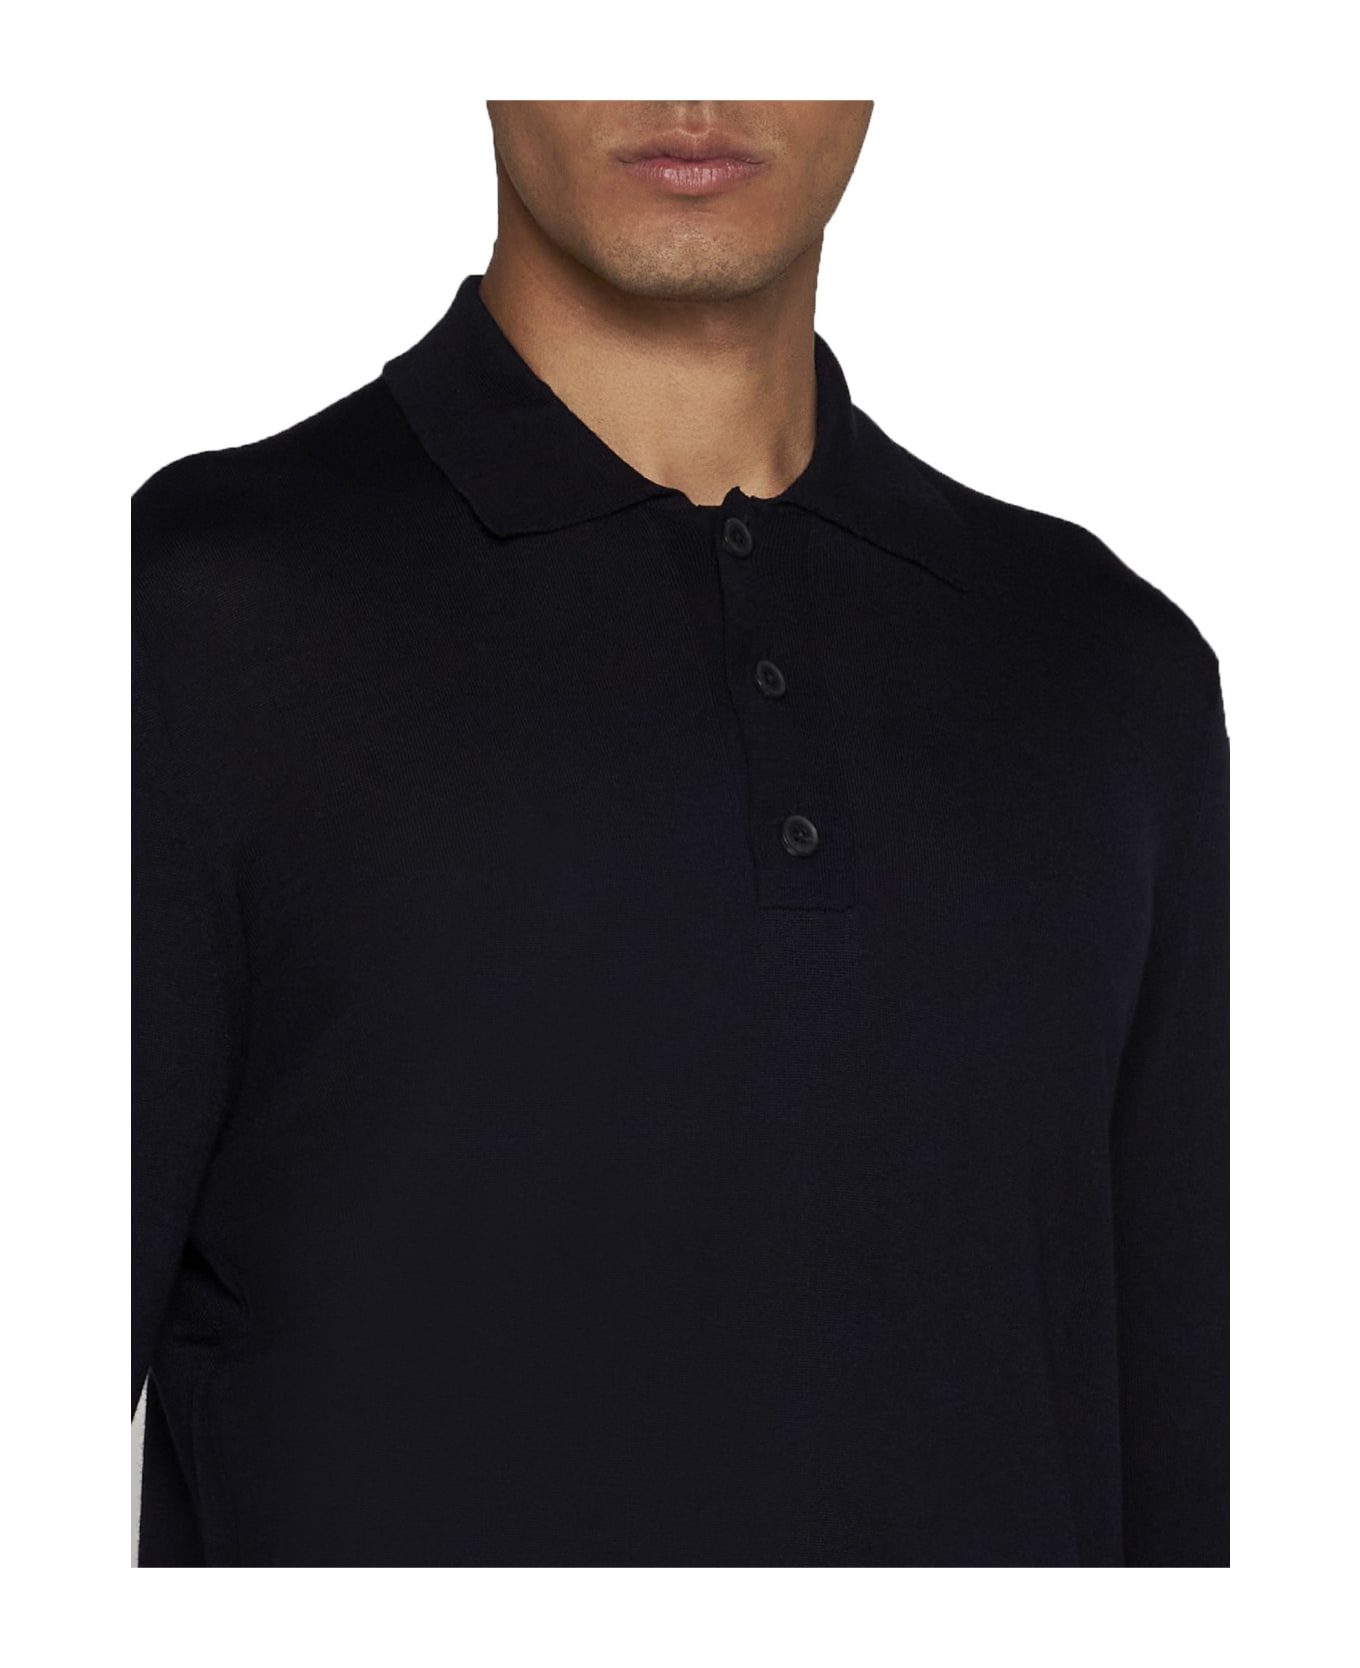 Low Brand Polo Shirt - Dark navy